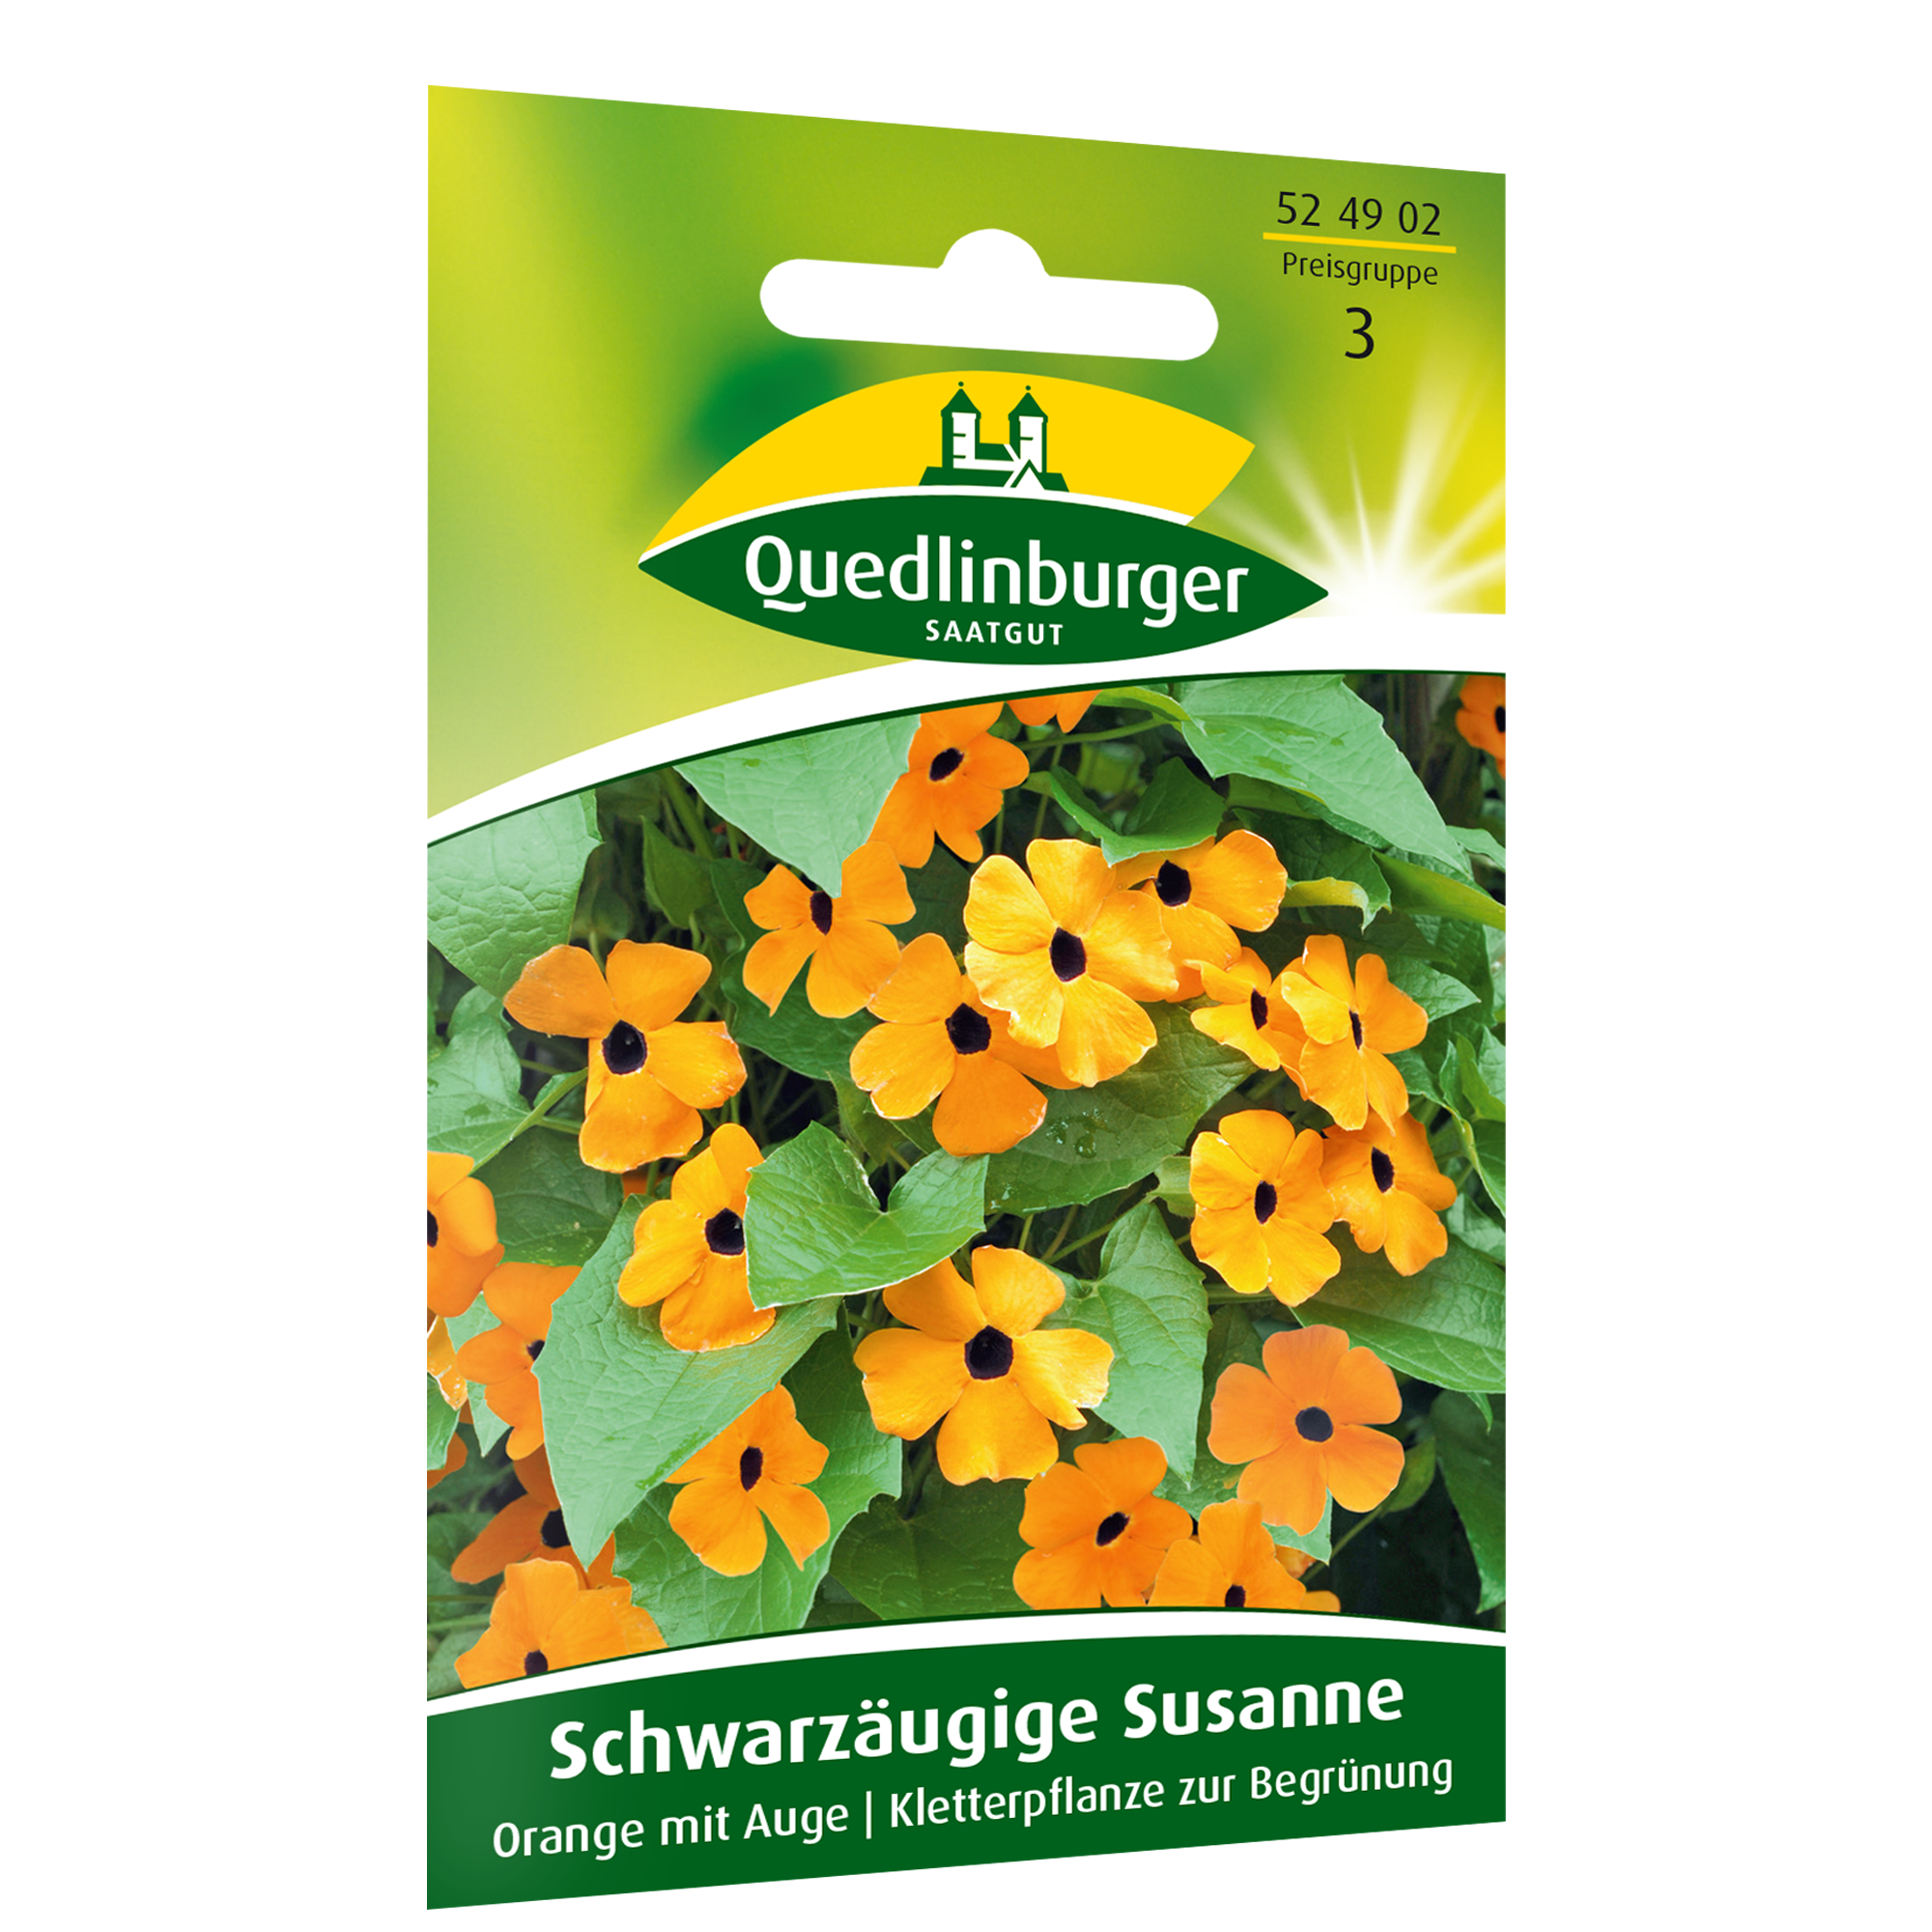 Schwarzäugige Susanne orange + product picture